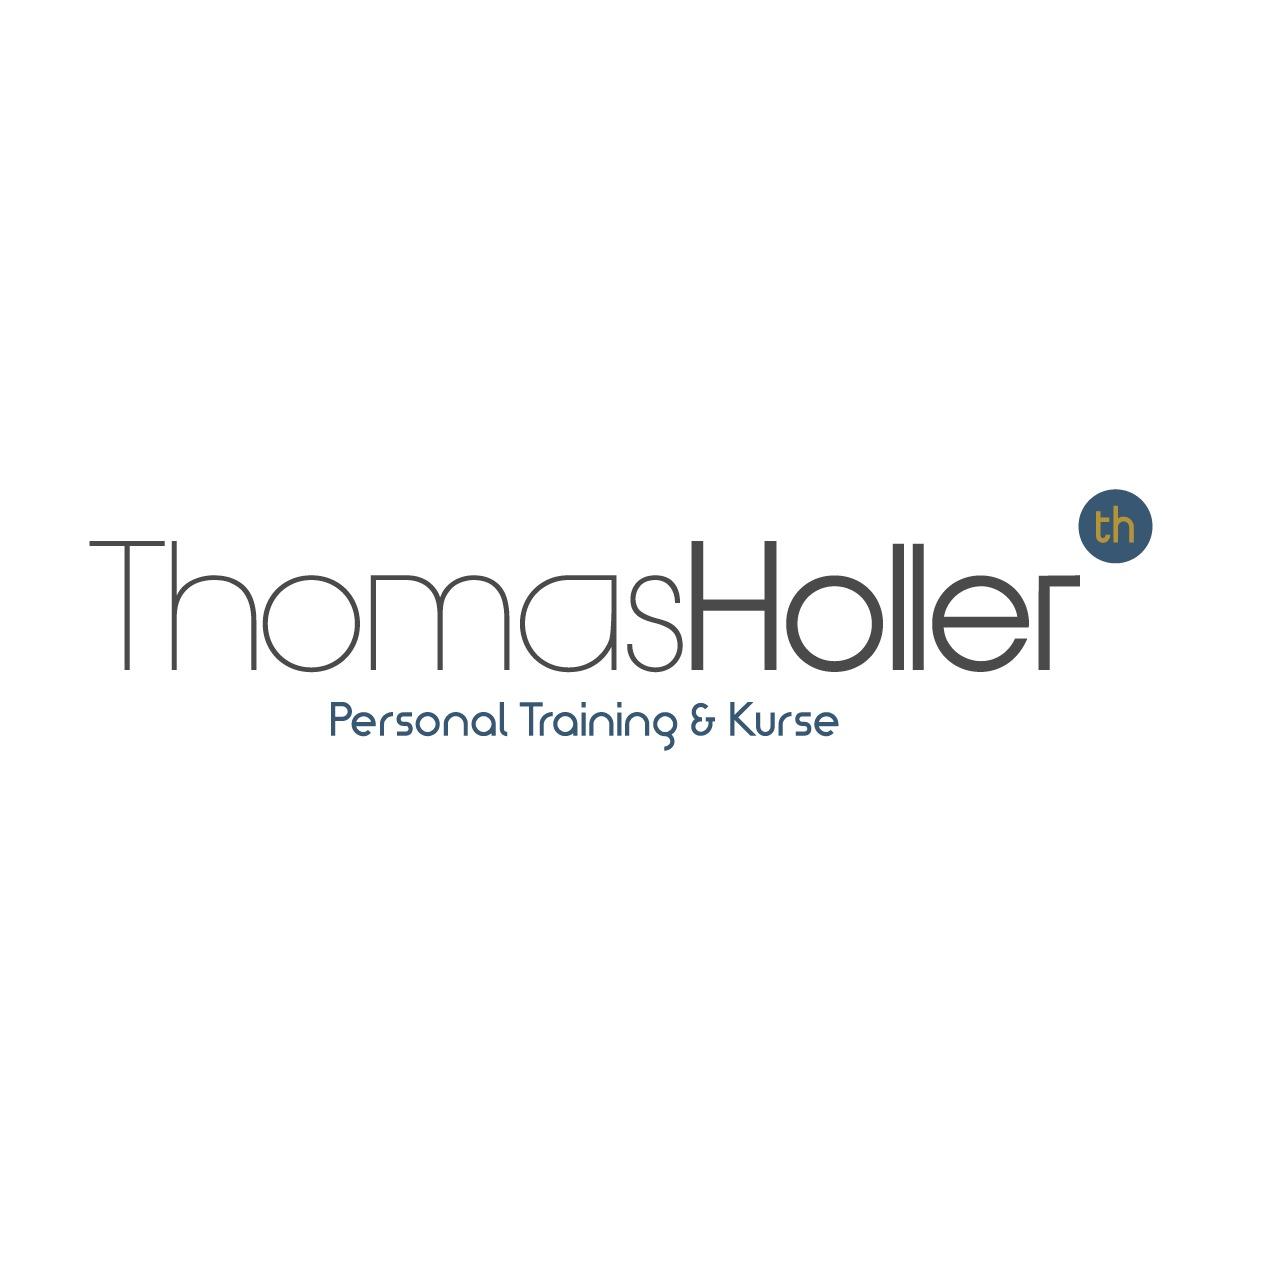 Thomas Holler Personal Training & Kurse